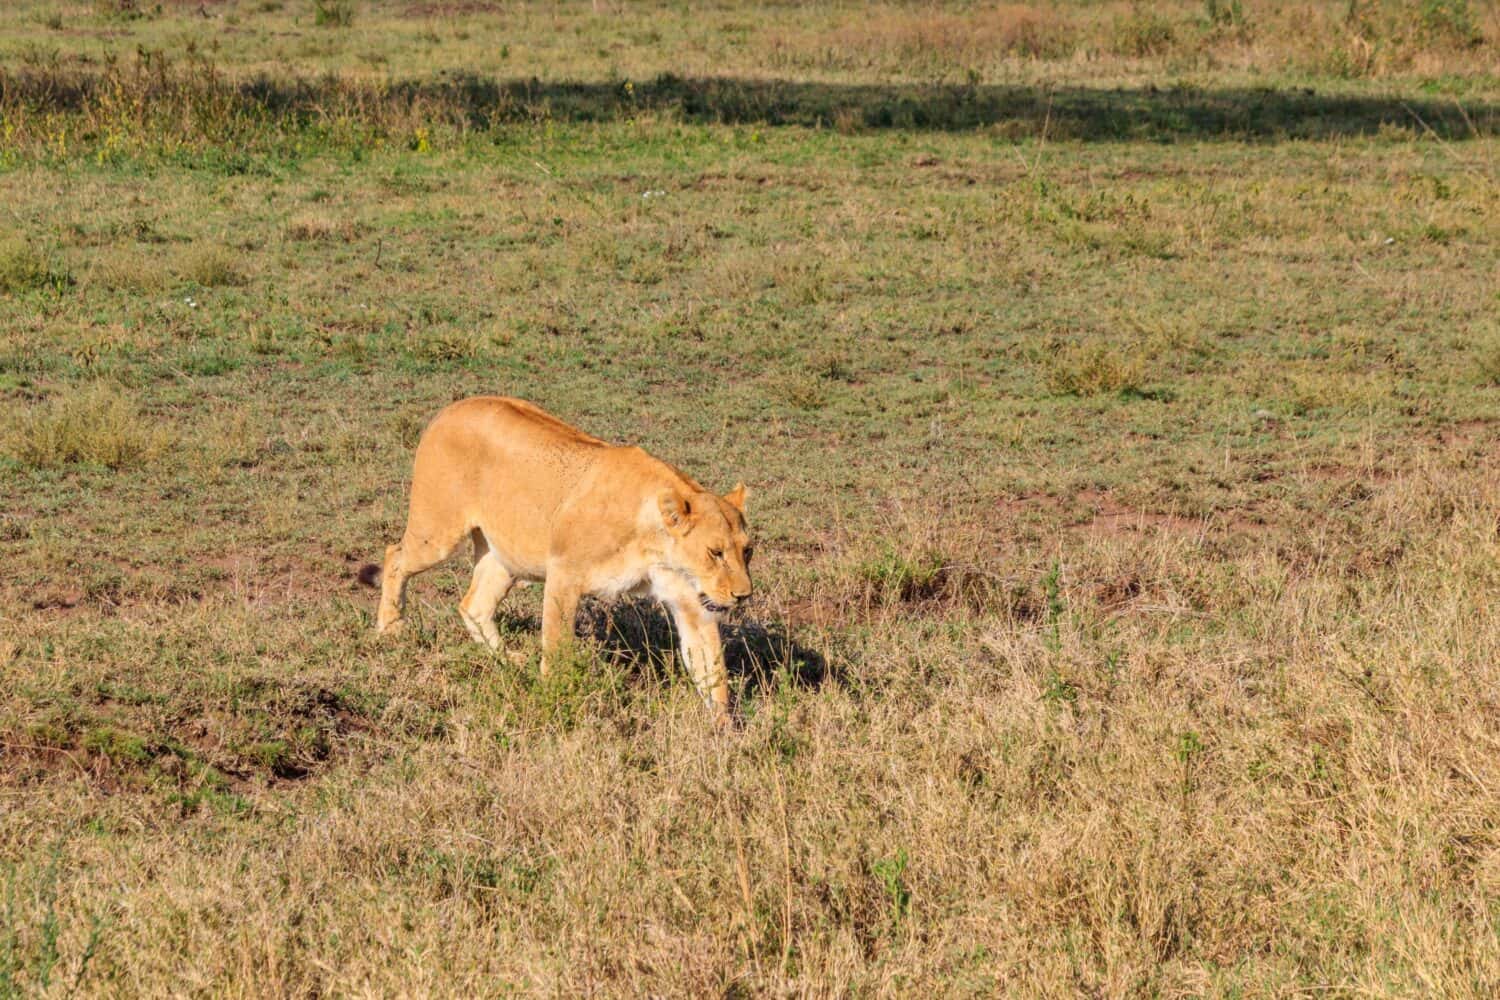 Lioness (Panthera leo) walking in savannah in Serengeti national park, Tanzania